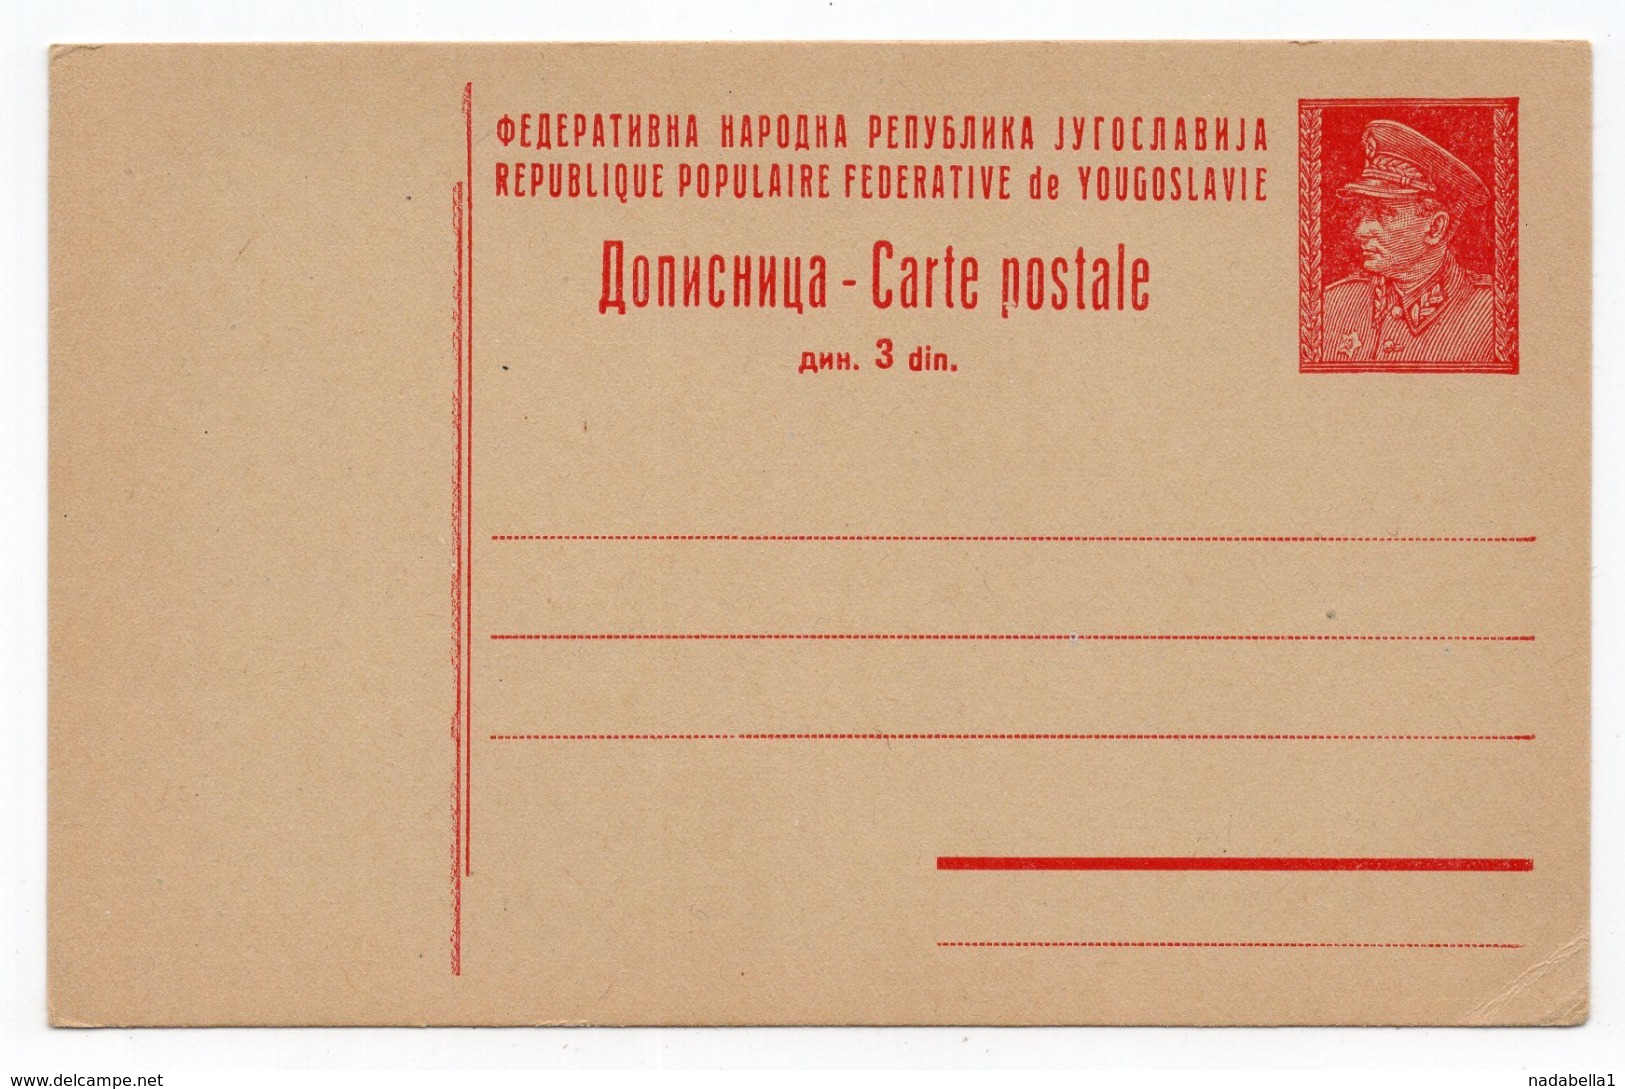 1947 FNR YUGOSLAVIA, TITO, 3 DINARA, CYRILLIC TEXT, STATIONERY CARD, MINT - Postal Stationery